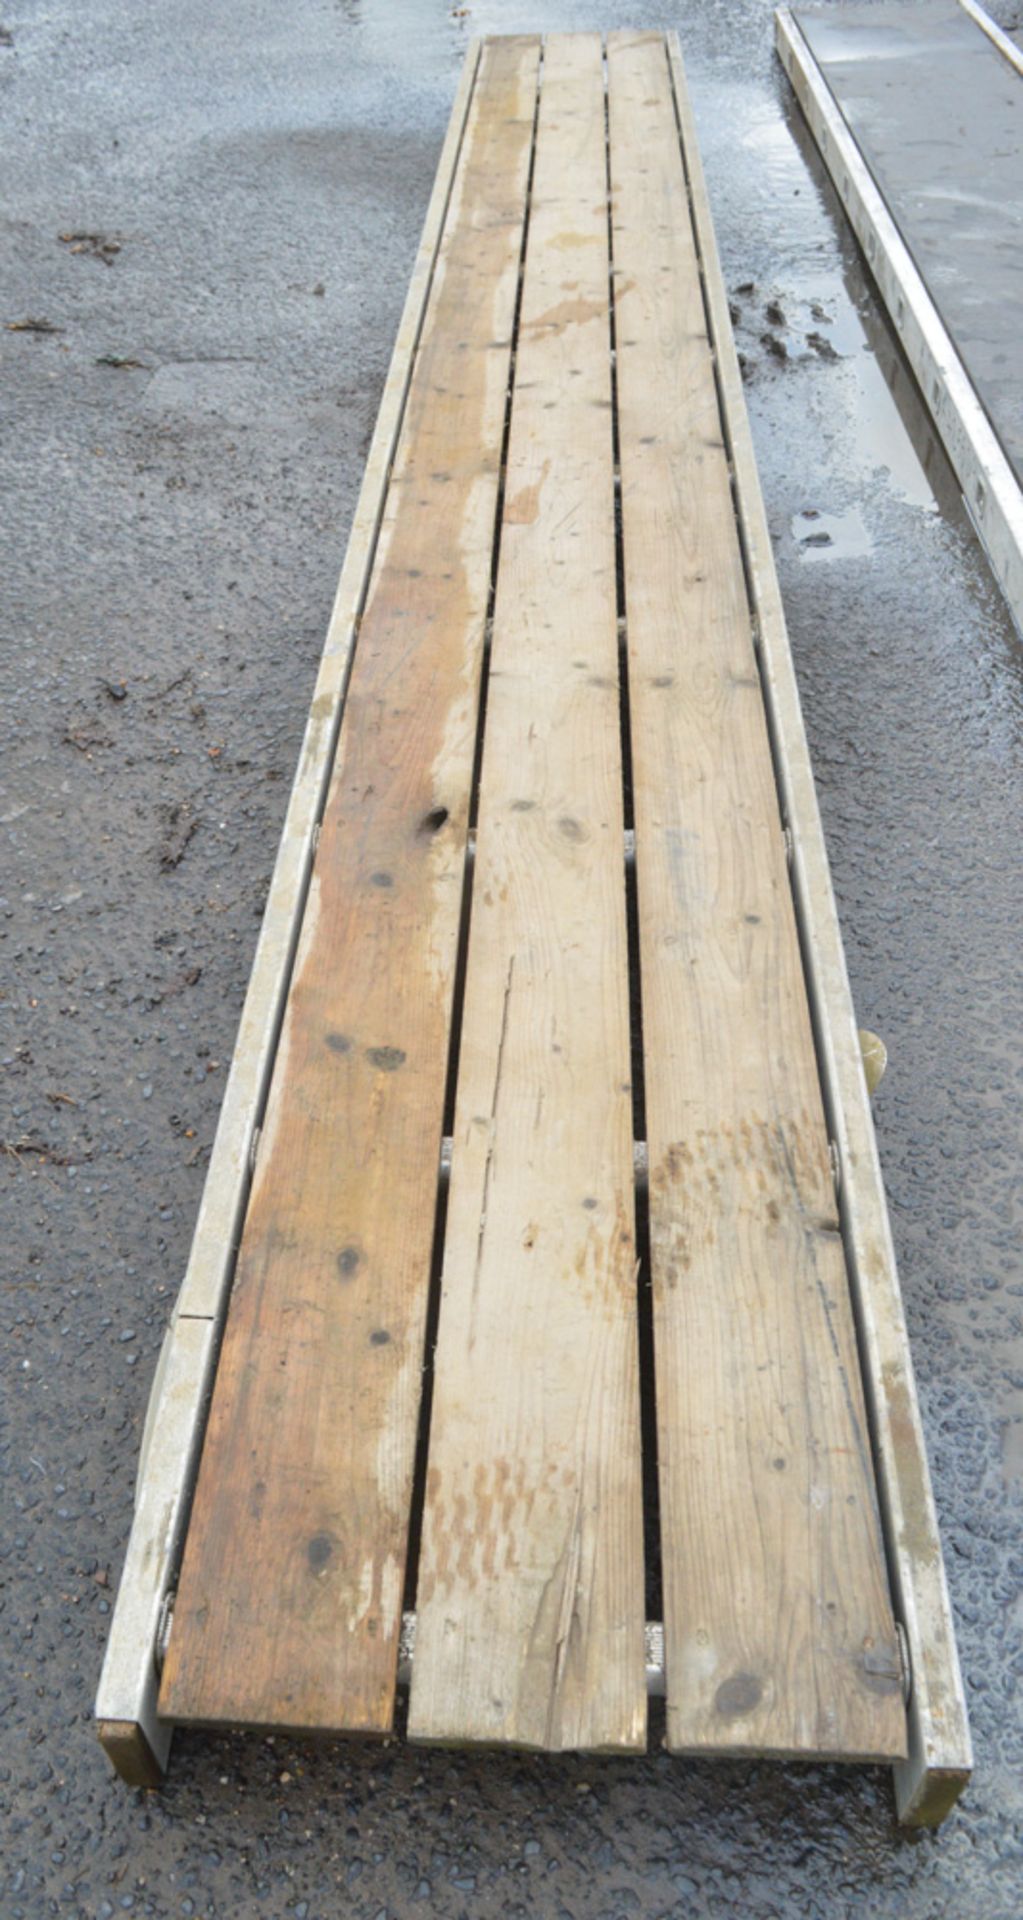 12ft aluminium staging board